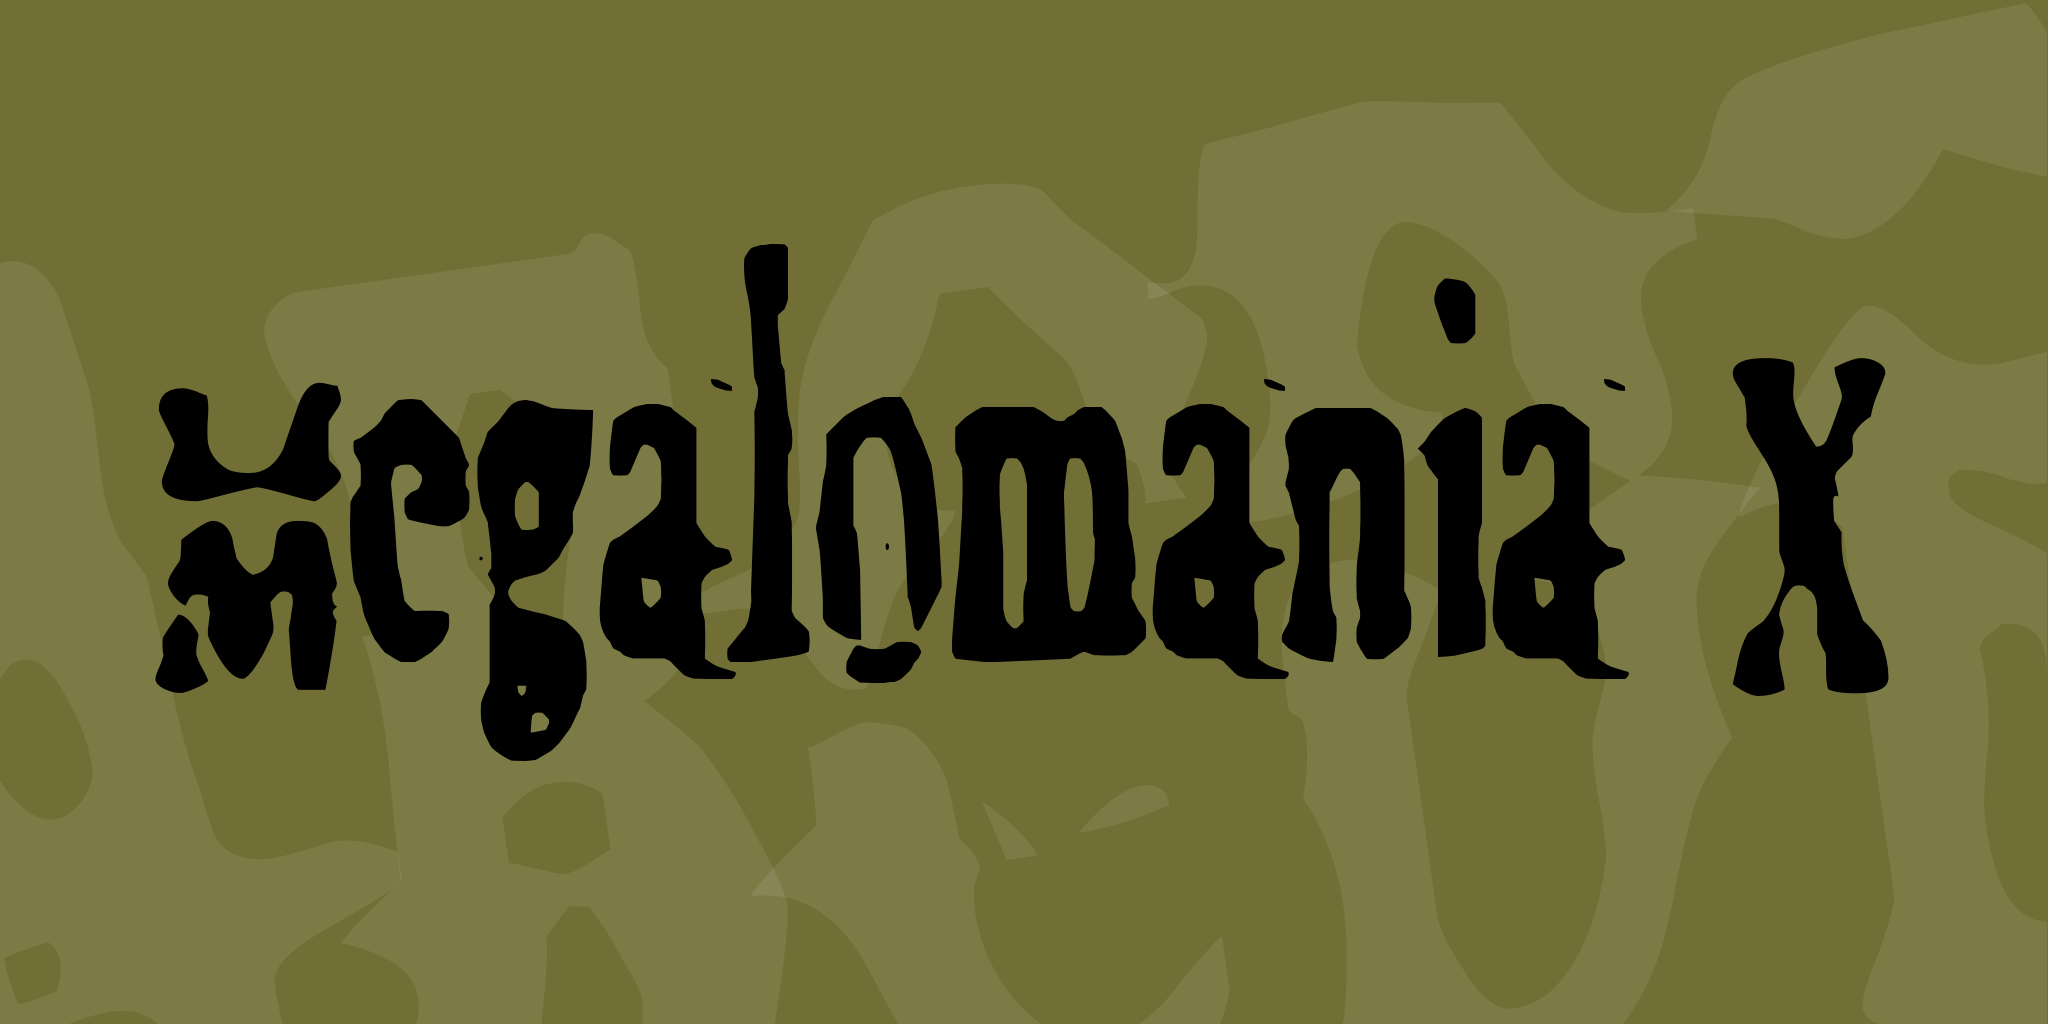 Megalomania X